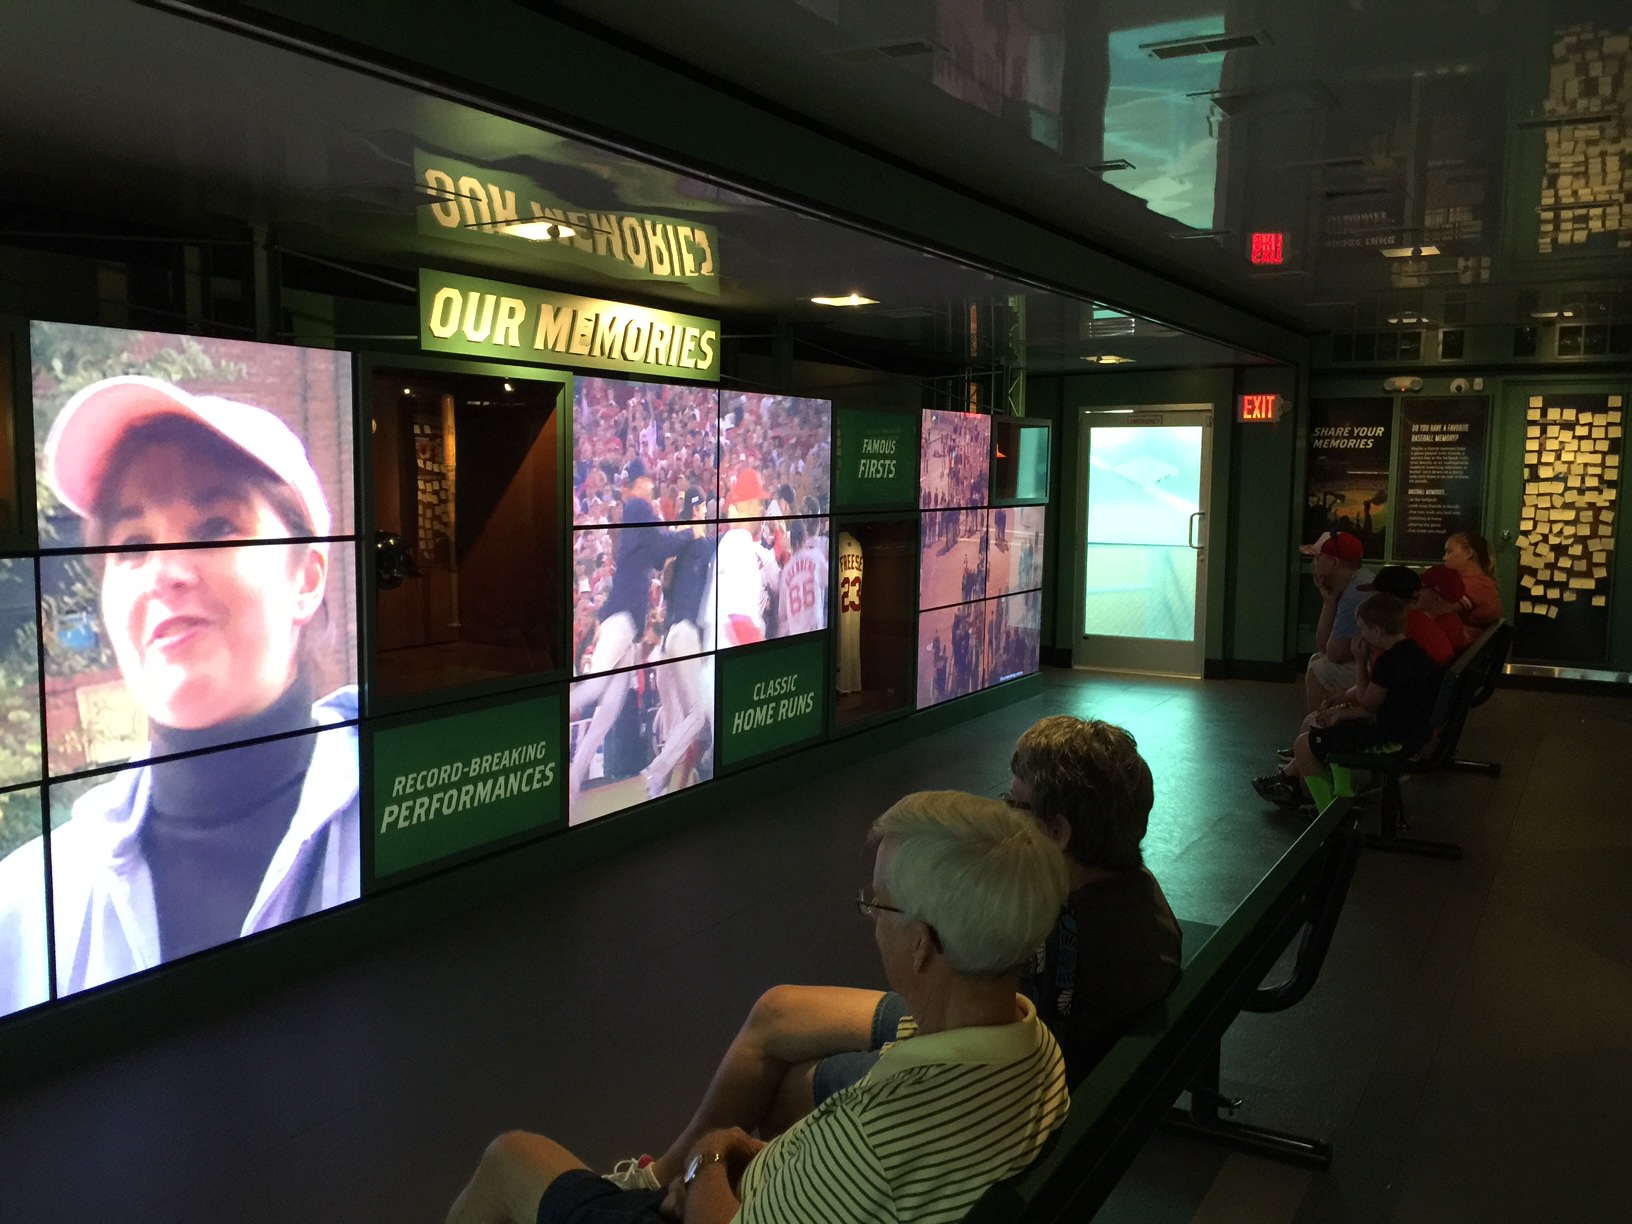 huge screens with baseball displays